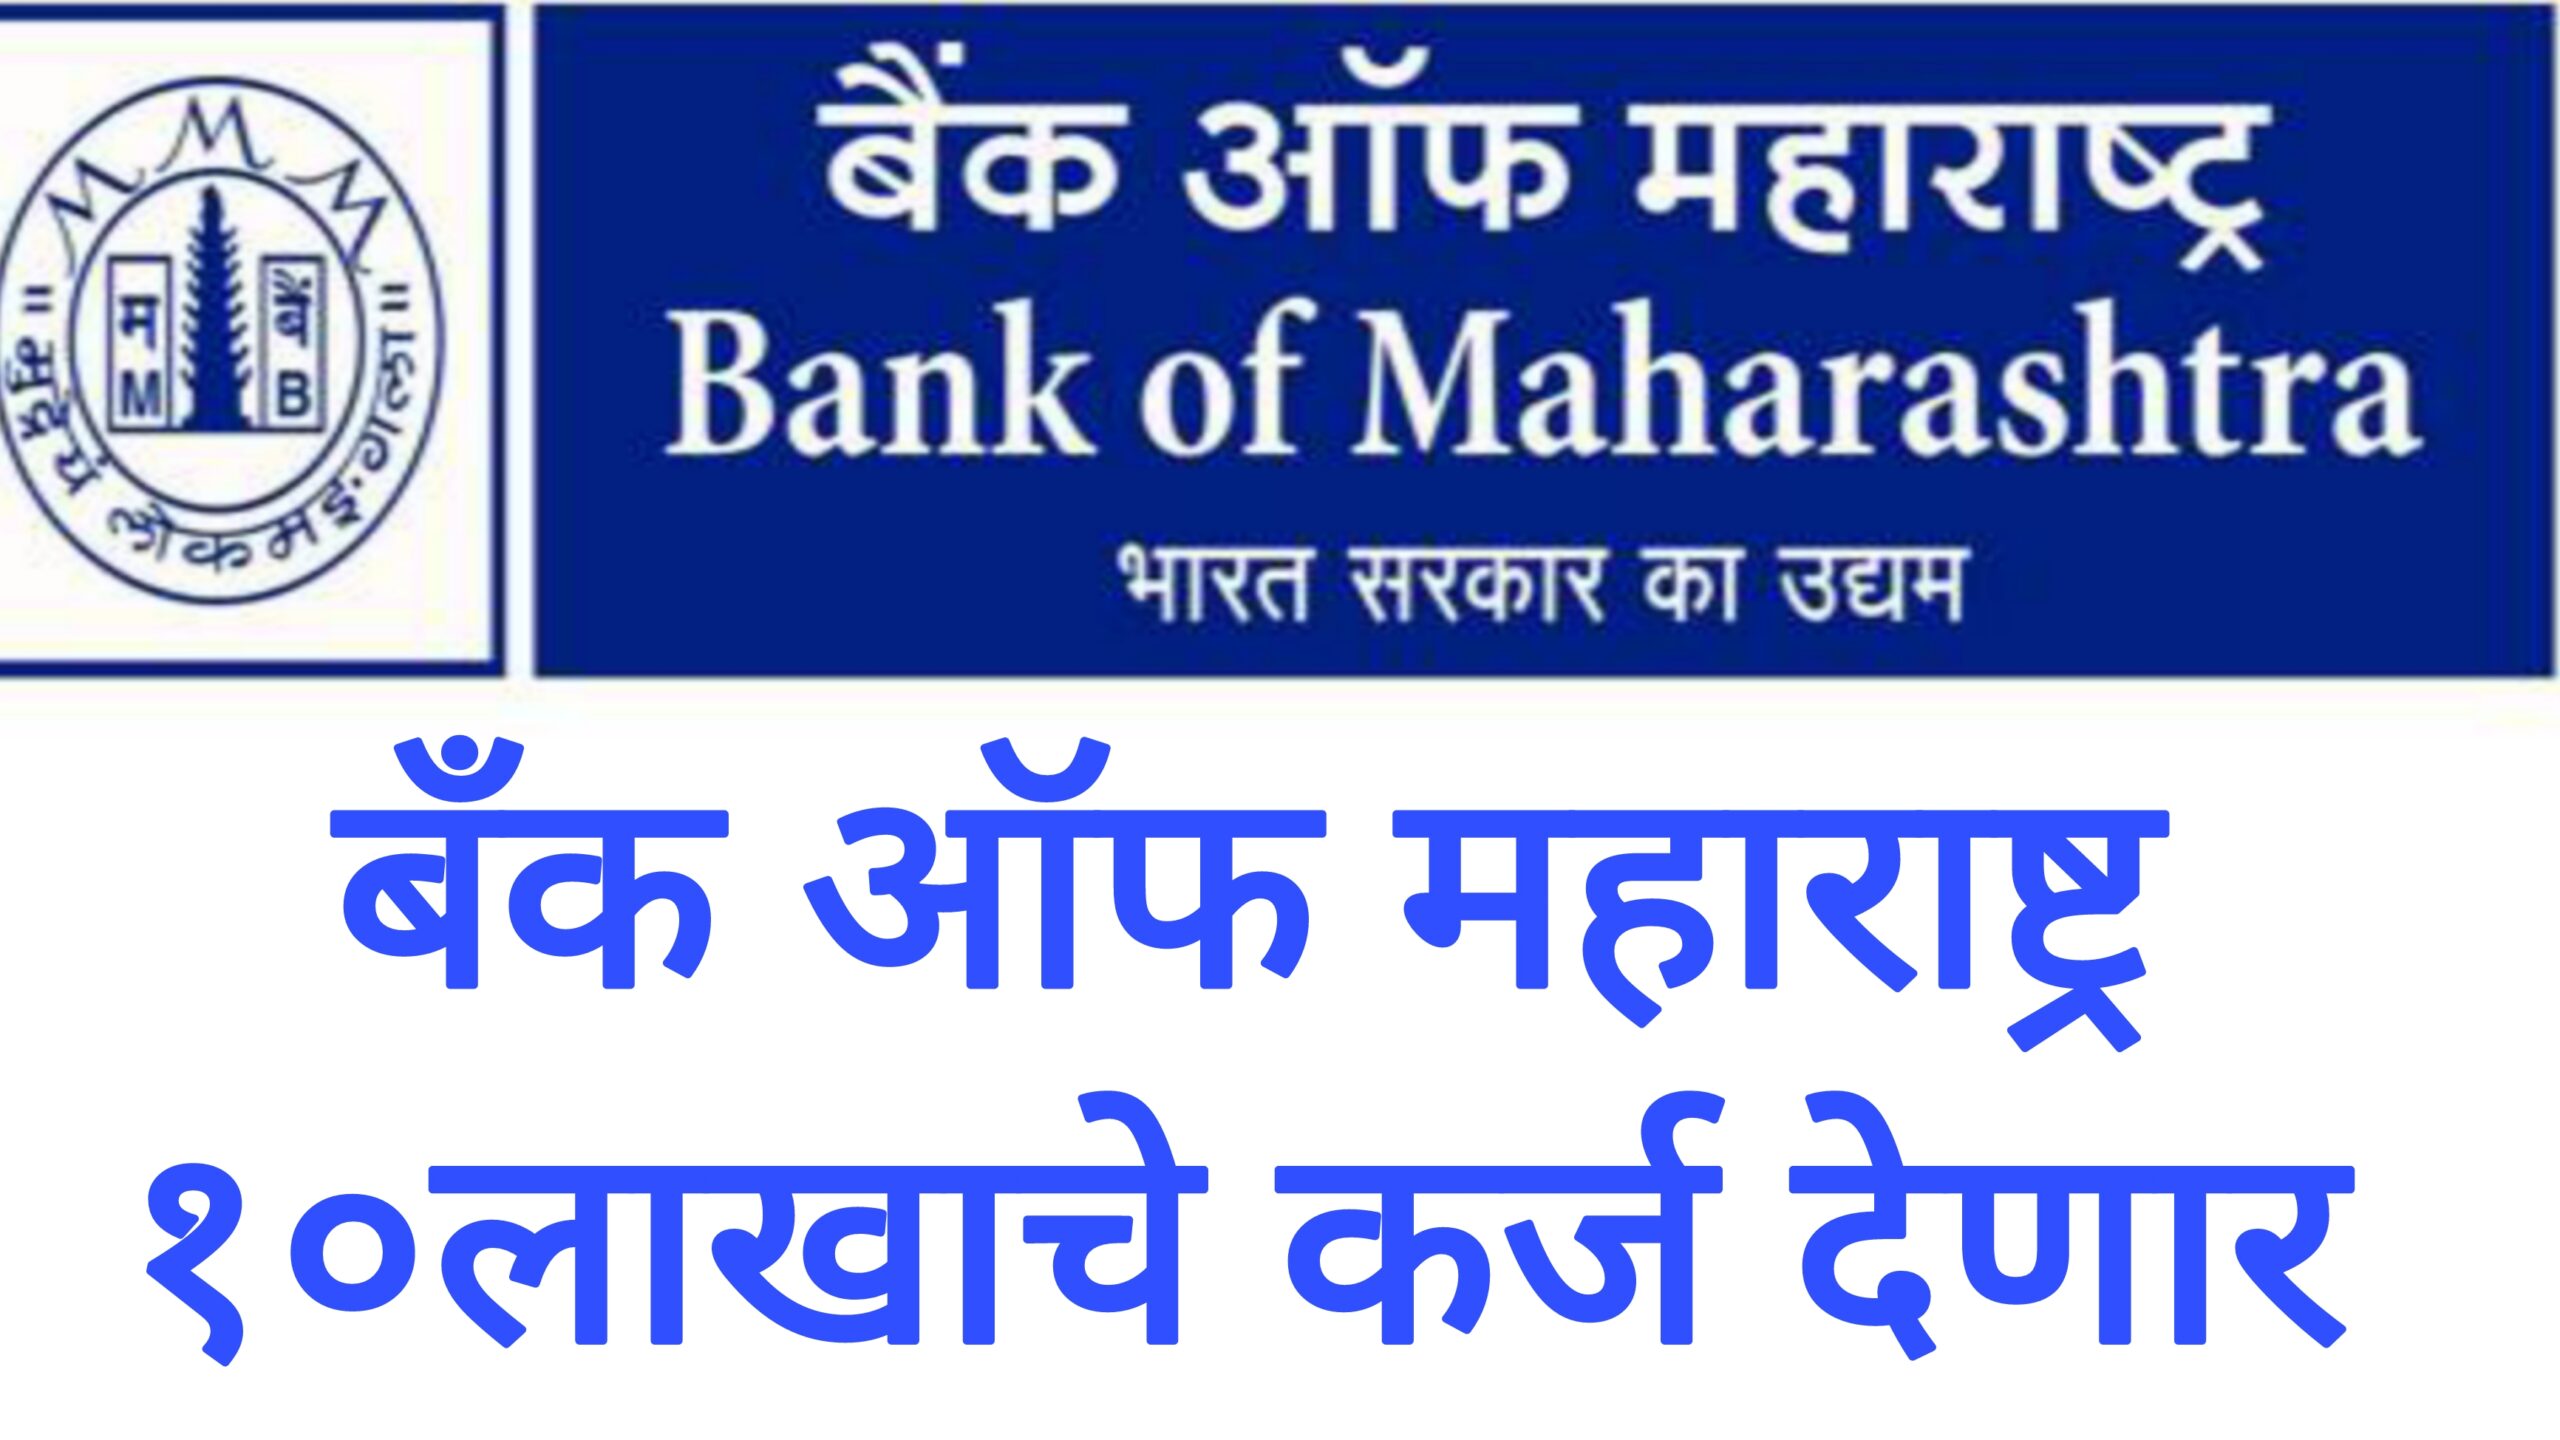 Bank of Maharashtra Specialist Officer Recruitment 2020